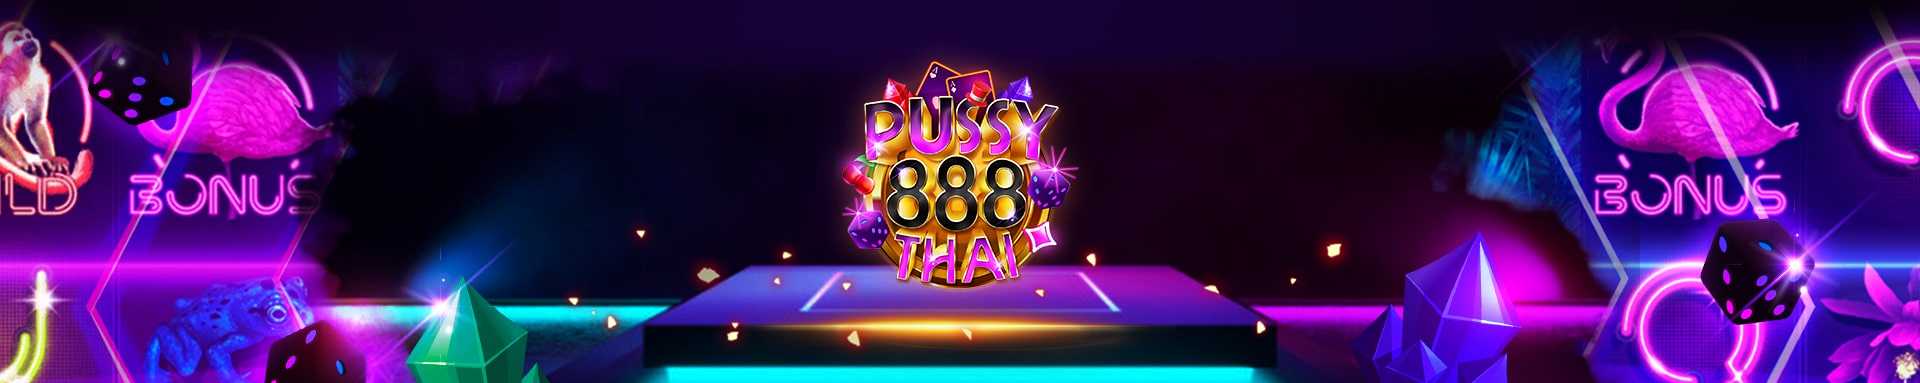 pussy888thai